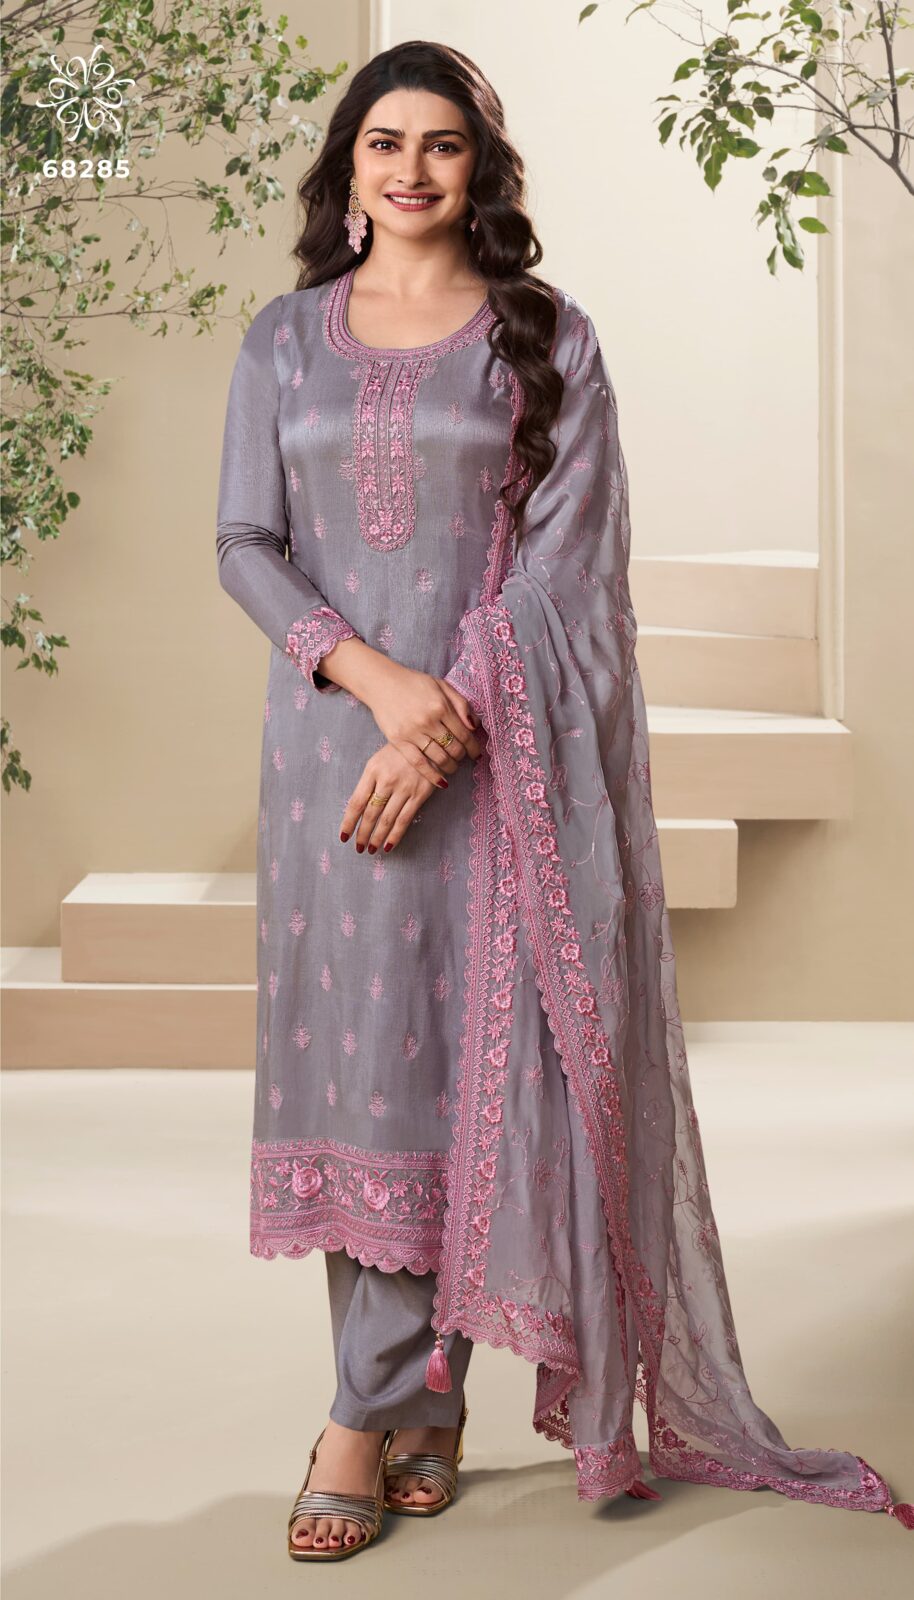 Vinay Nutan 68285 - Dola Silk With Contrast Thread Work Suit